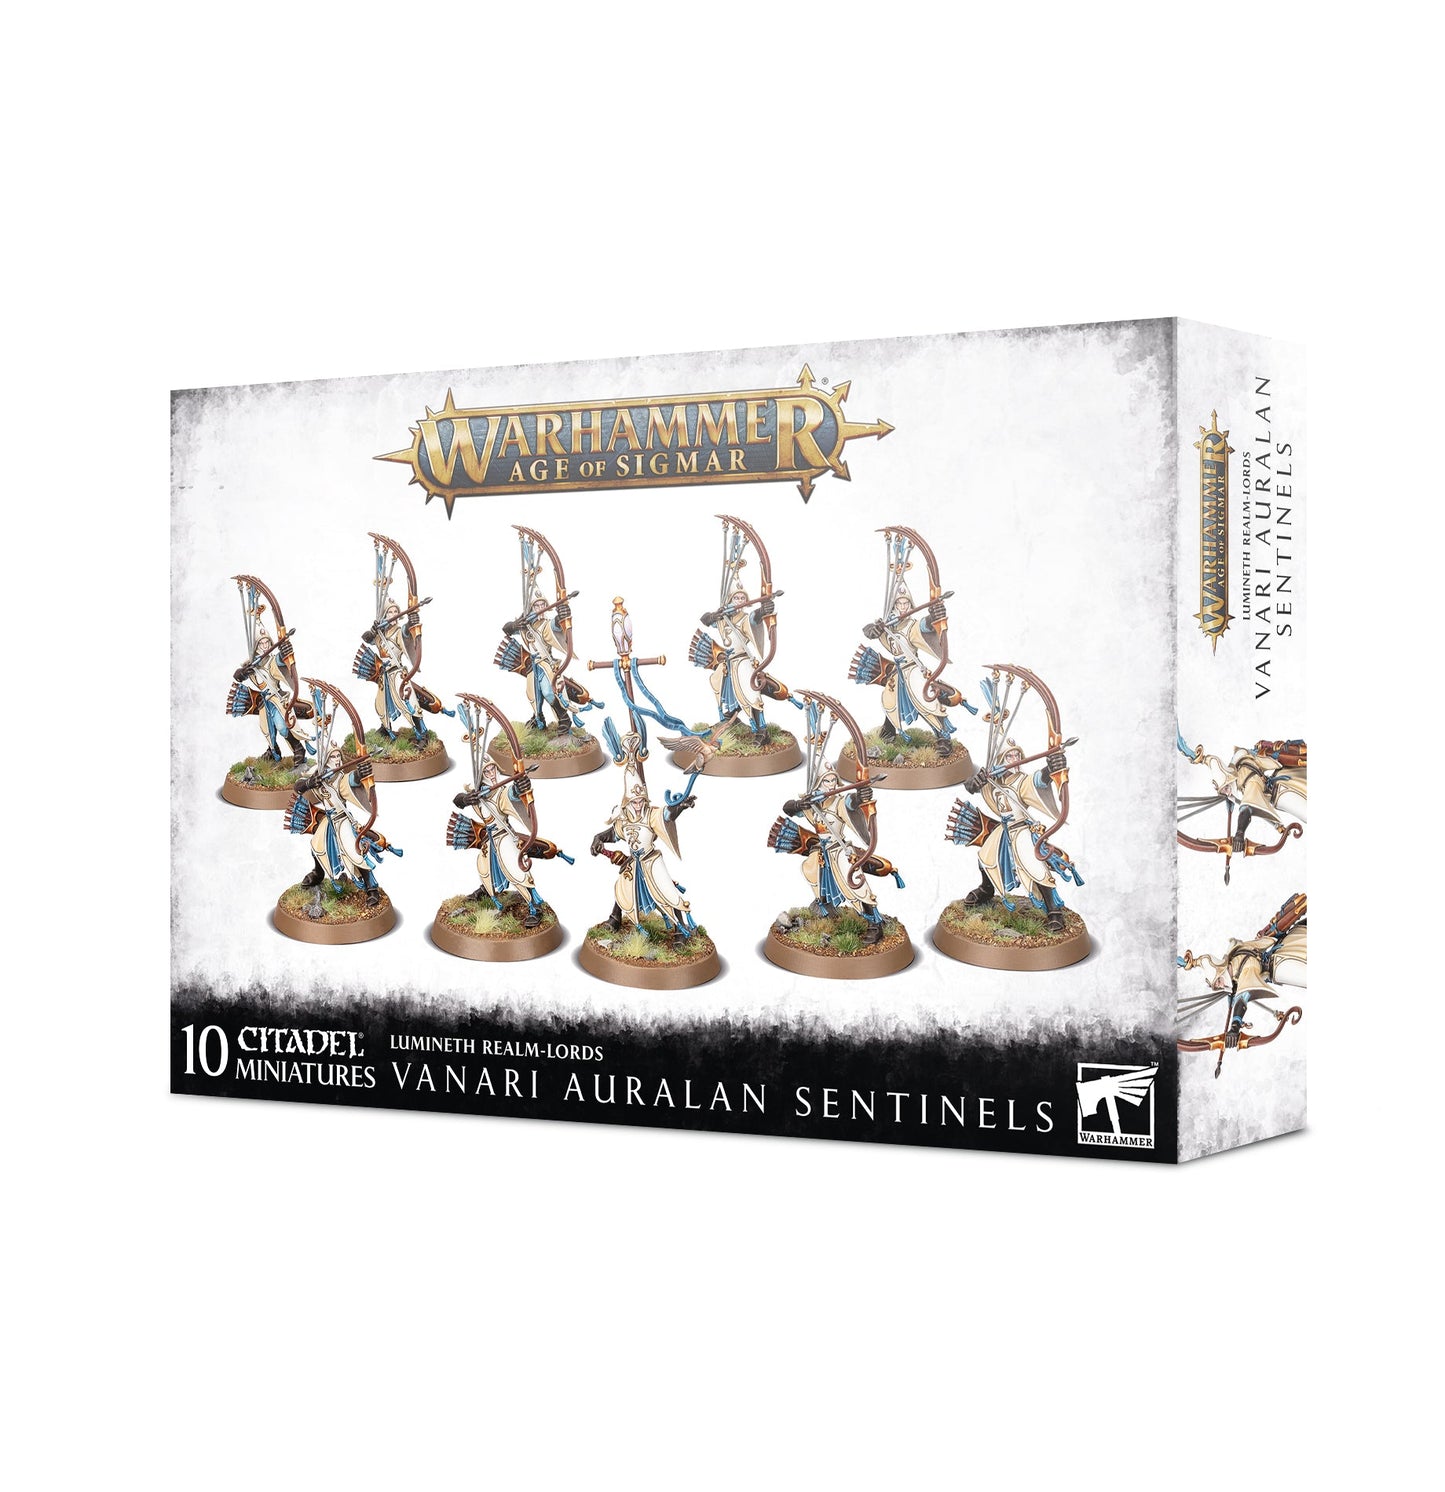 Lumineth Realm Lords Vanari Auralan Sentinels - Command Elite Hobbies